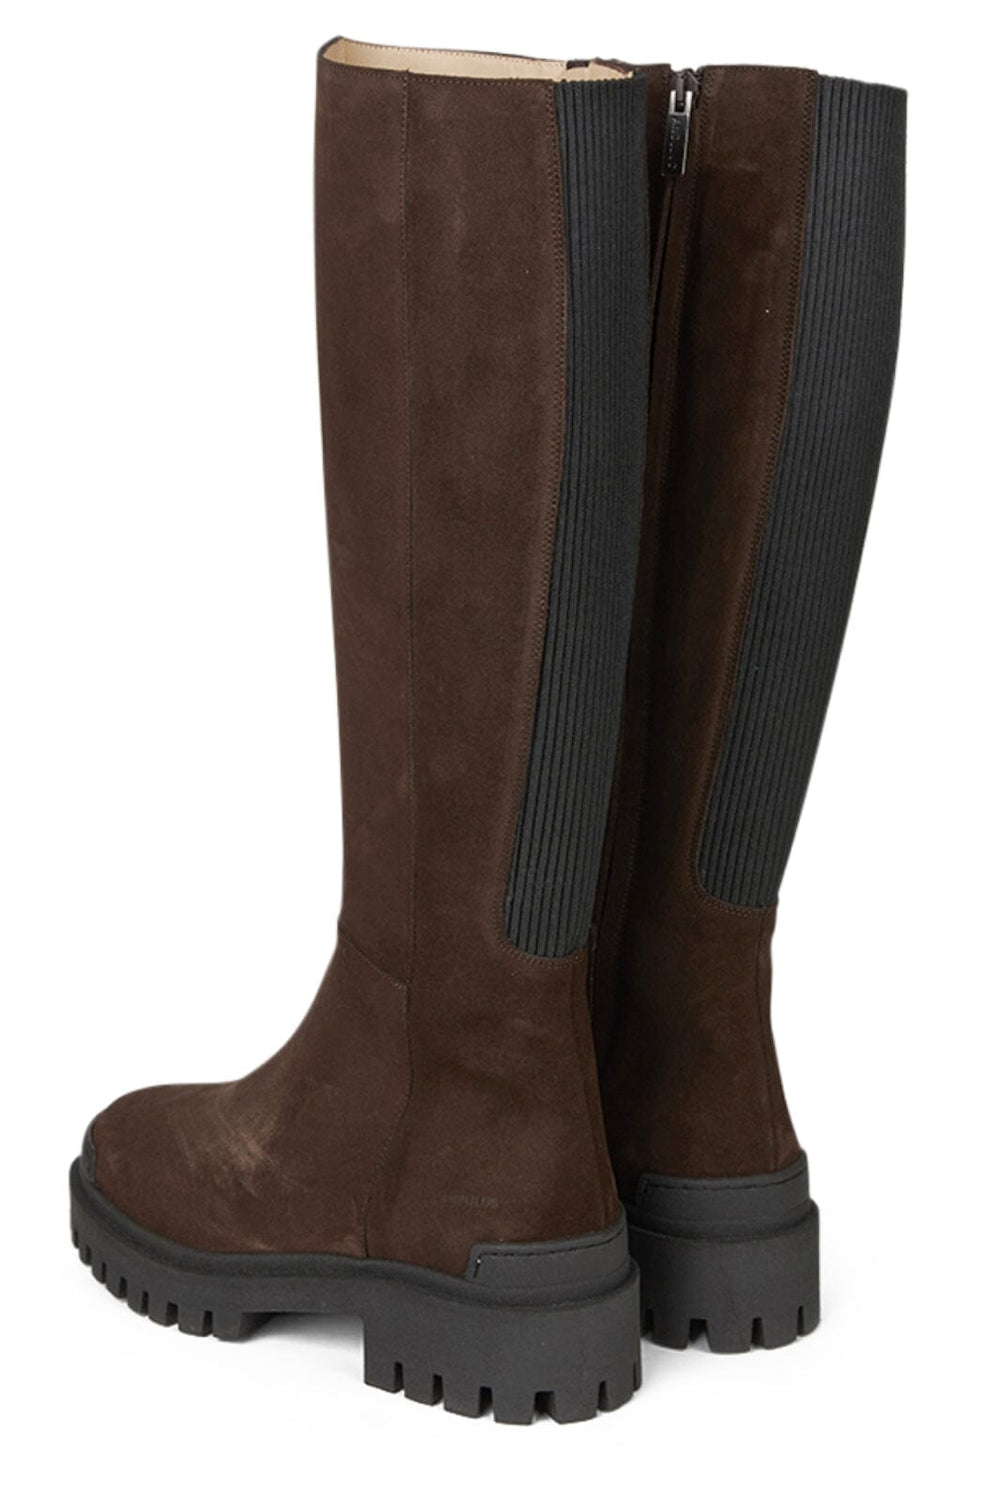 Angulus - High-leg boot - 1718/019 Brown/Black Støvler 